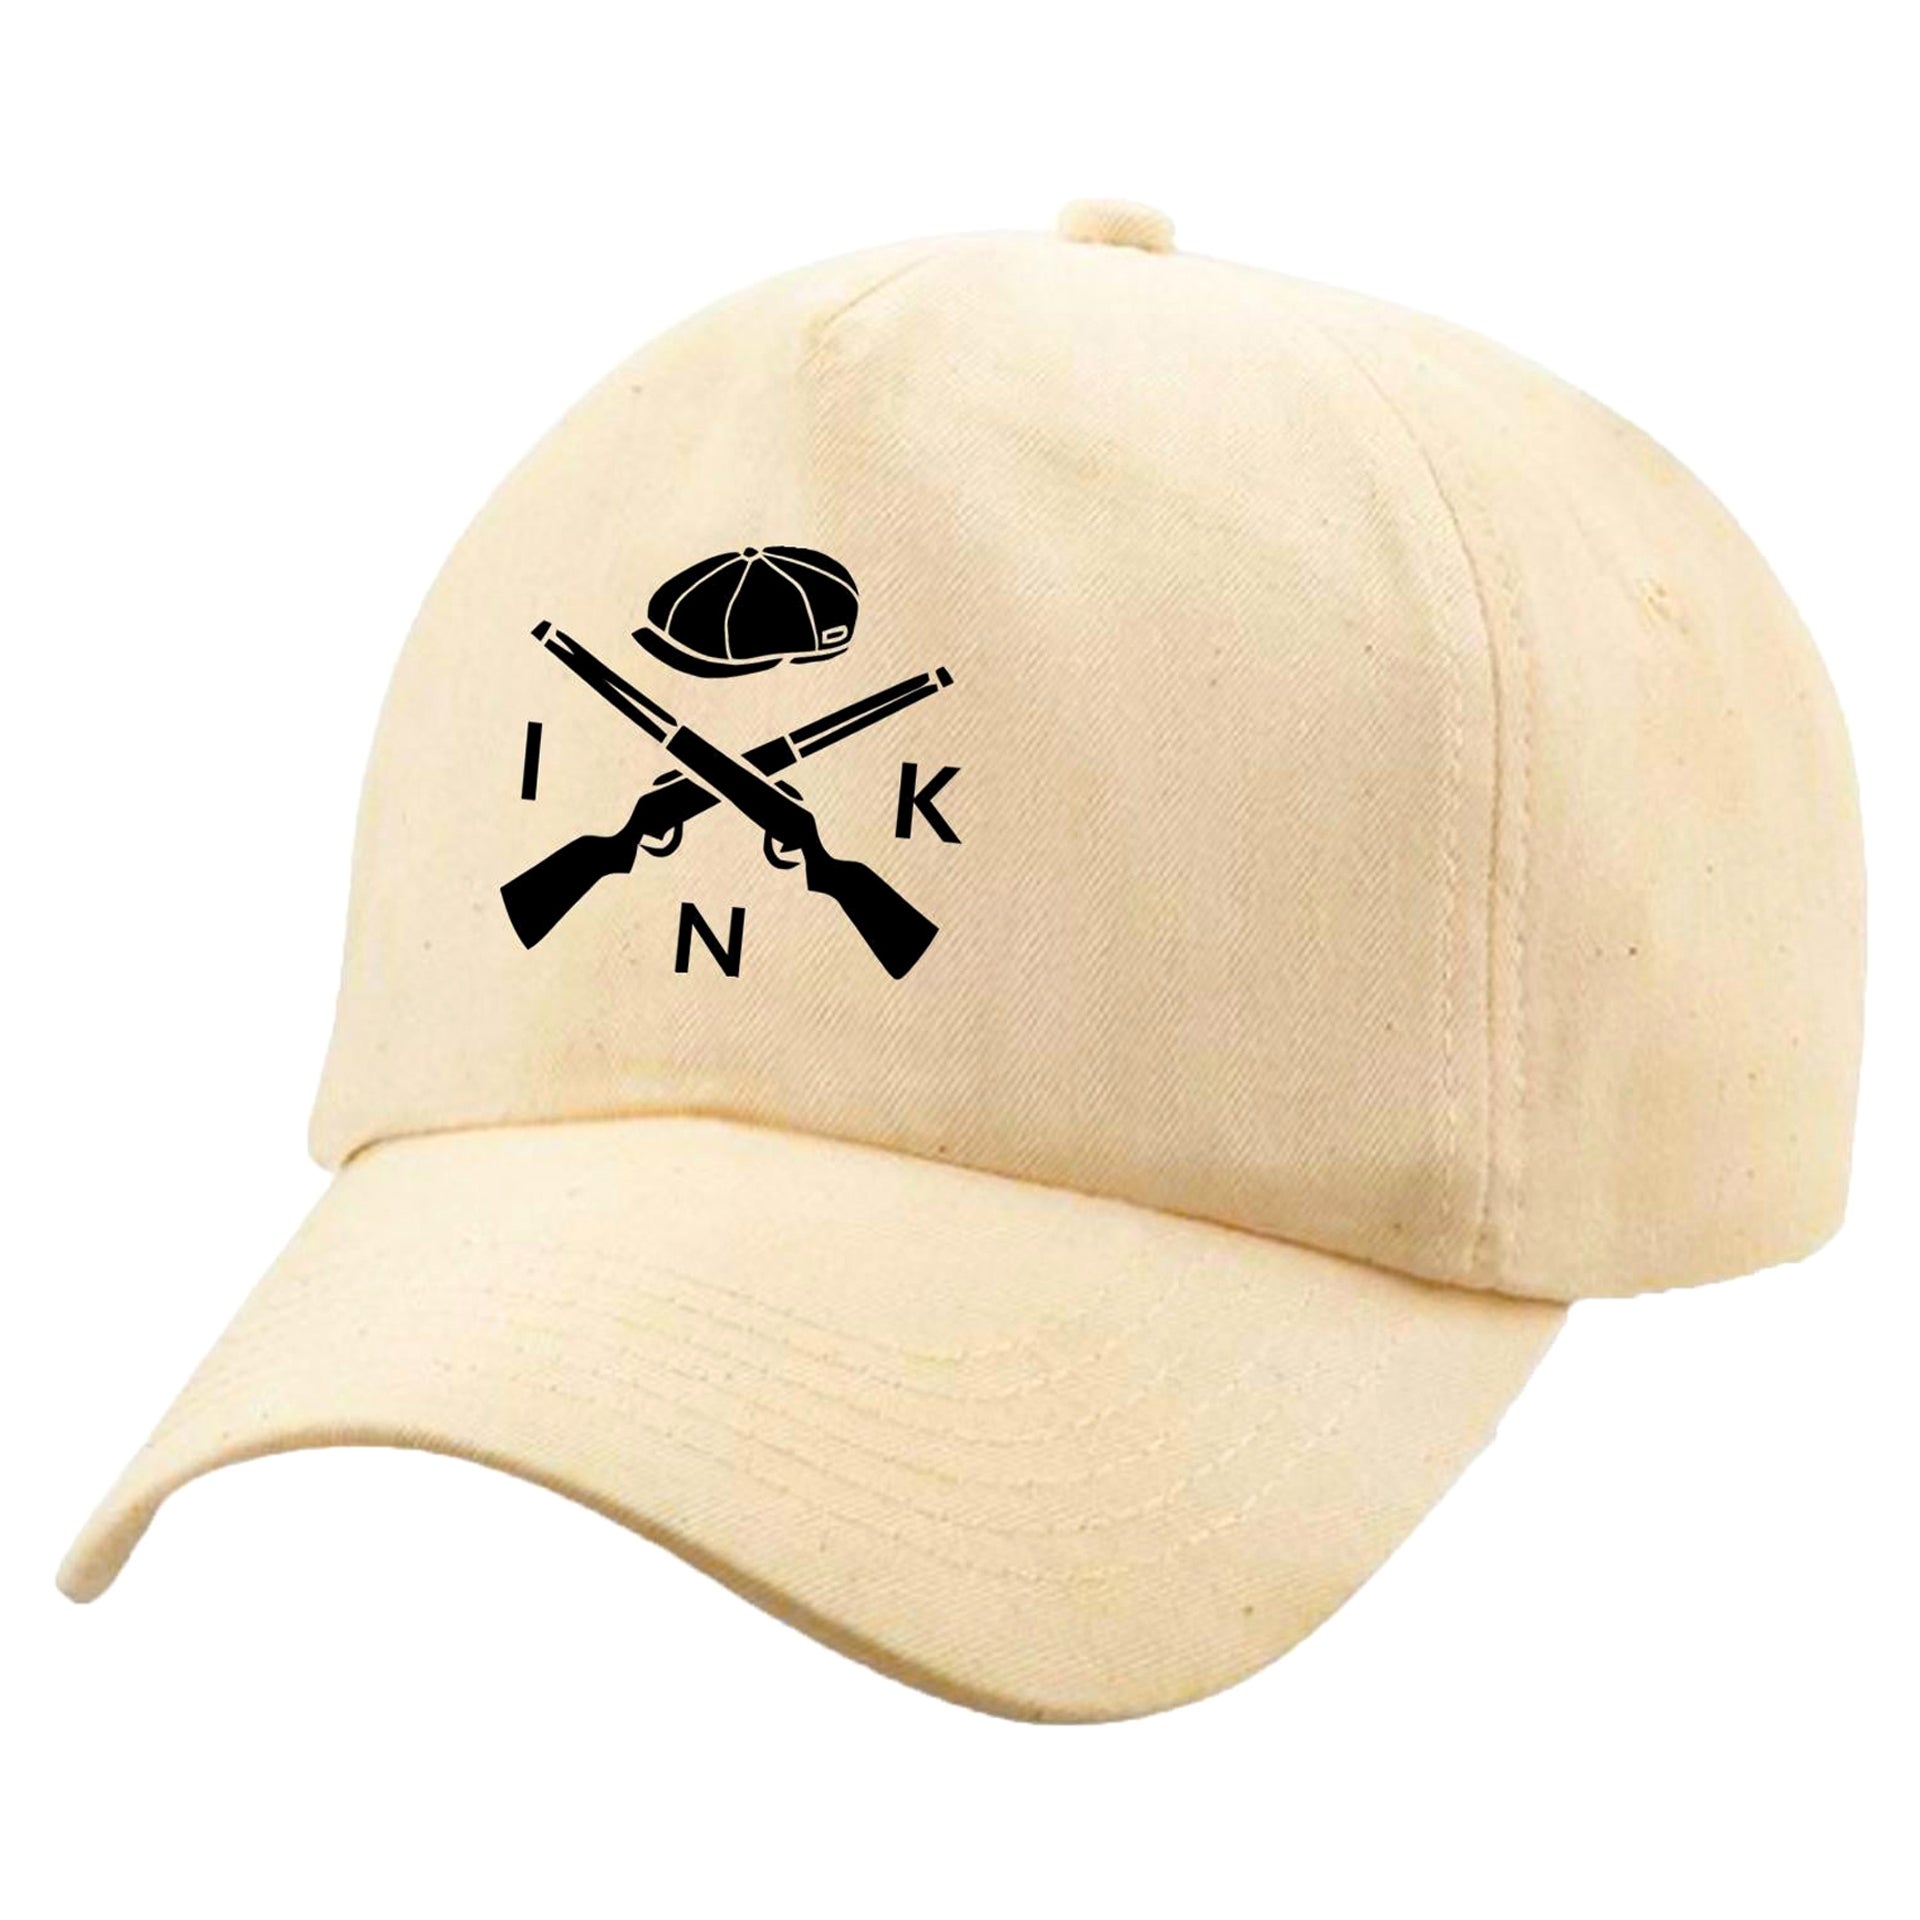 Ivory hat cap NWOT